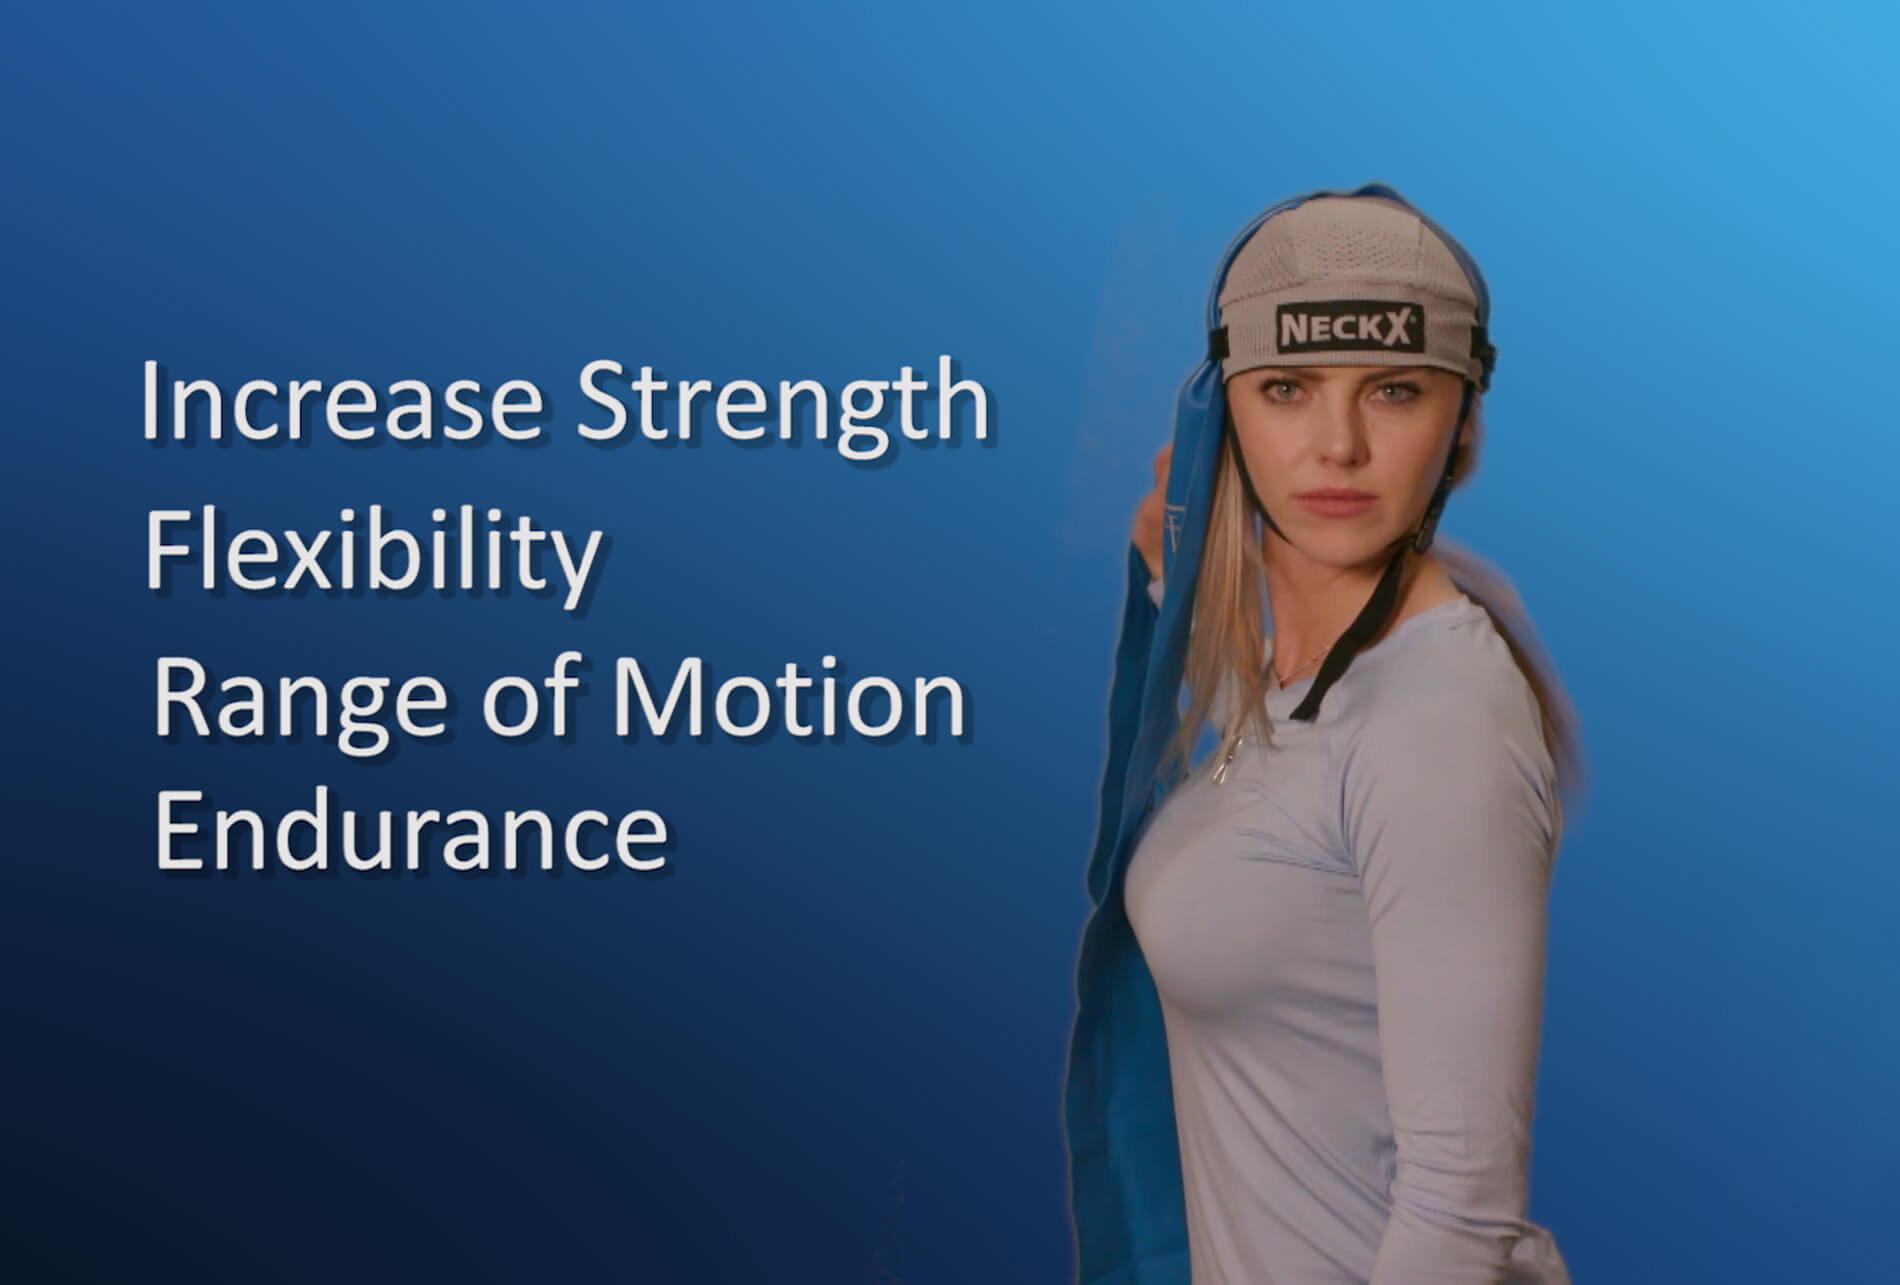 Increase strength flexibility range of motion endurance.